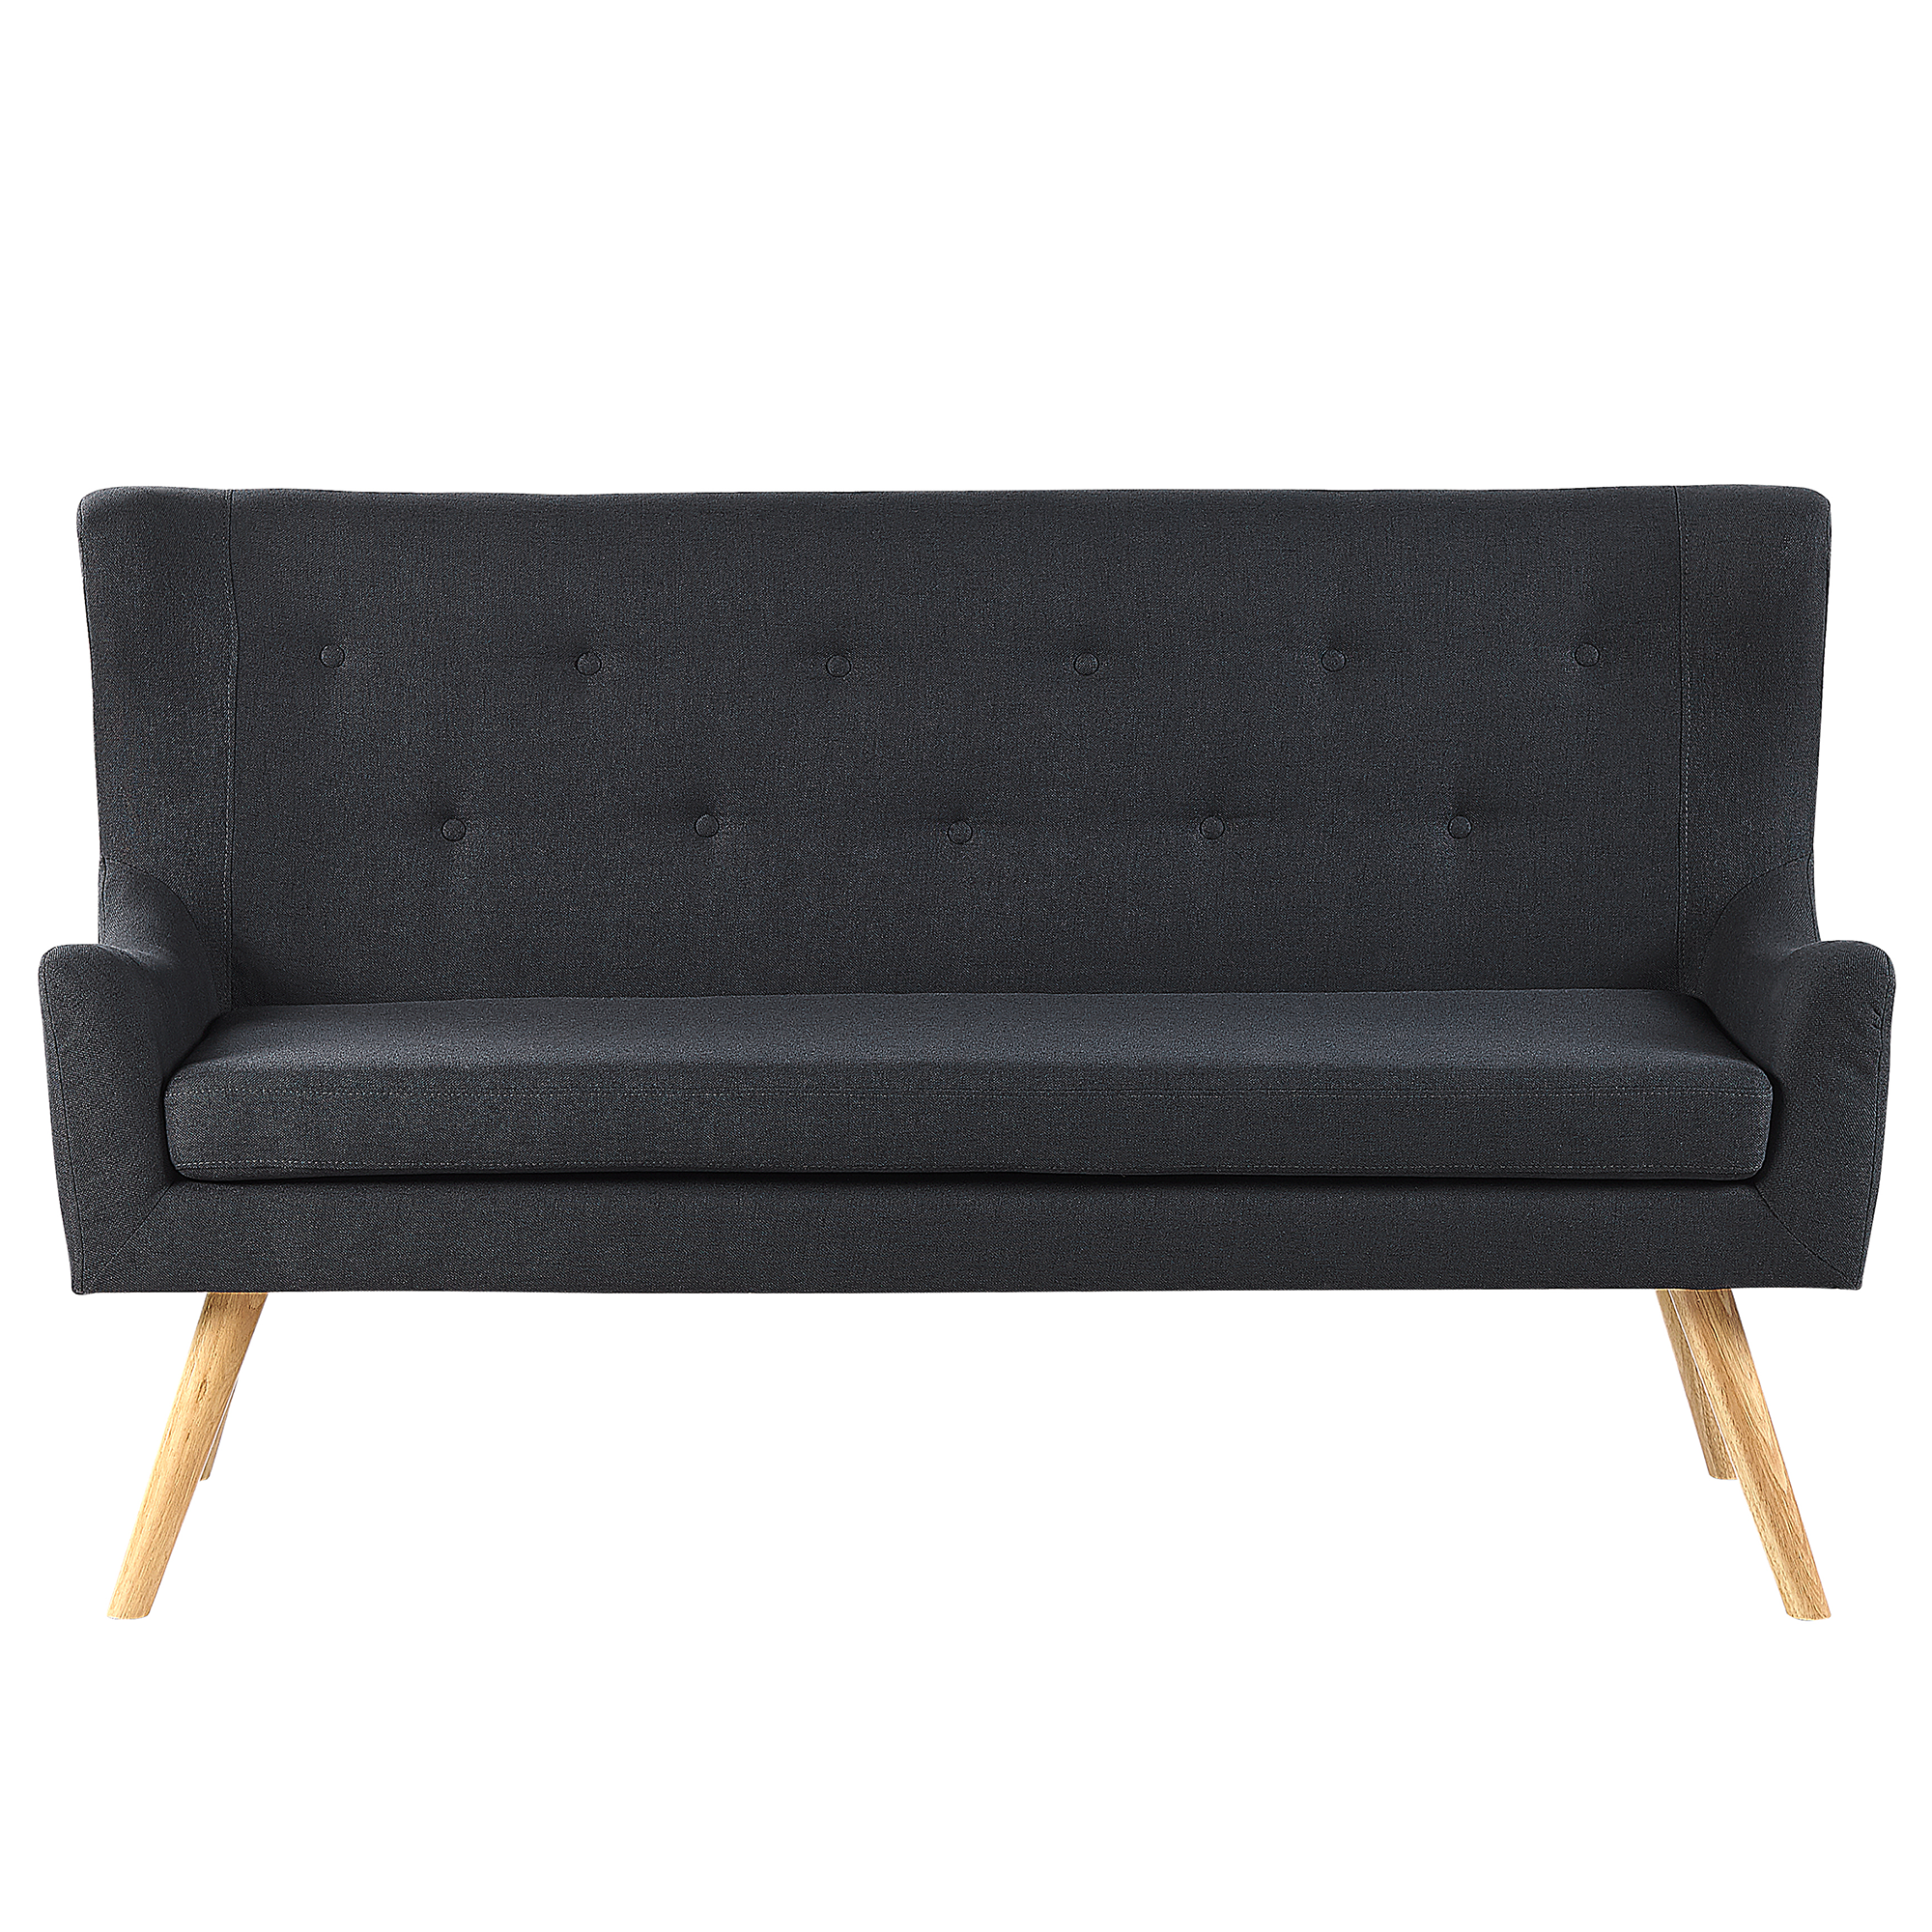 Beliani Kitchen Sofa Black Polyester Fabric Upholstery 2-Seater Wingback Tufted Light Wood Legs